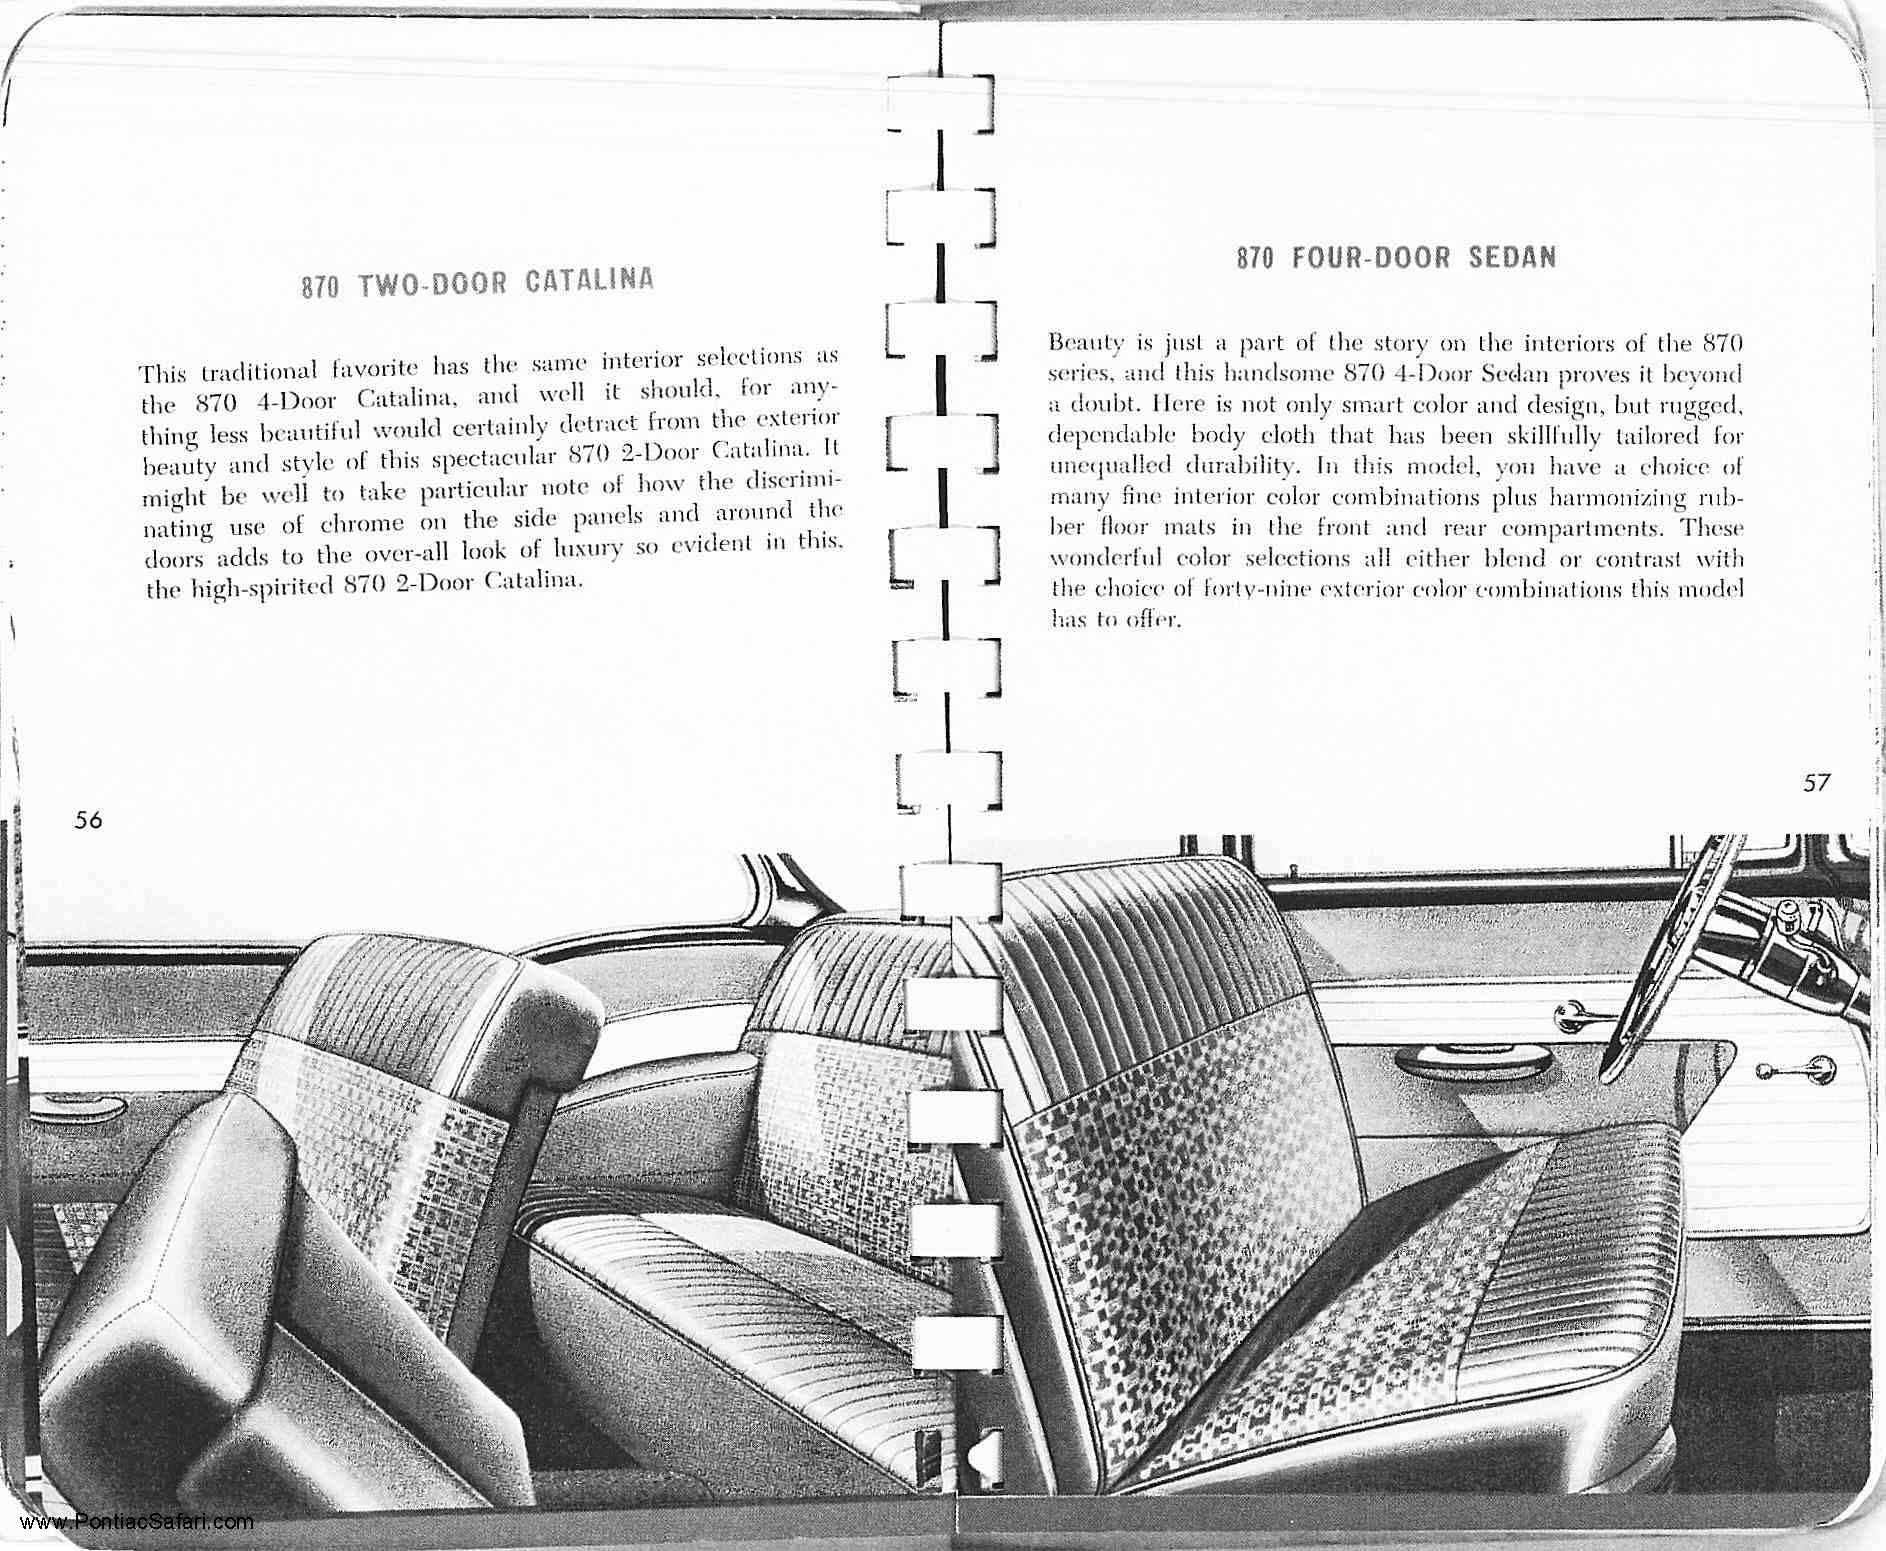 1956 Pontiac Facts Book-030